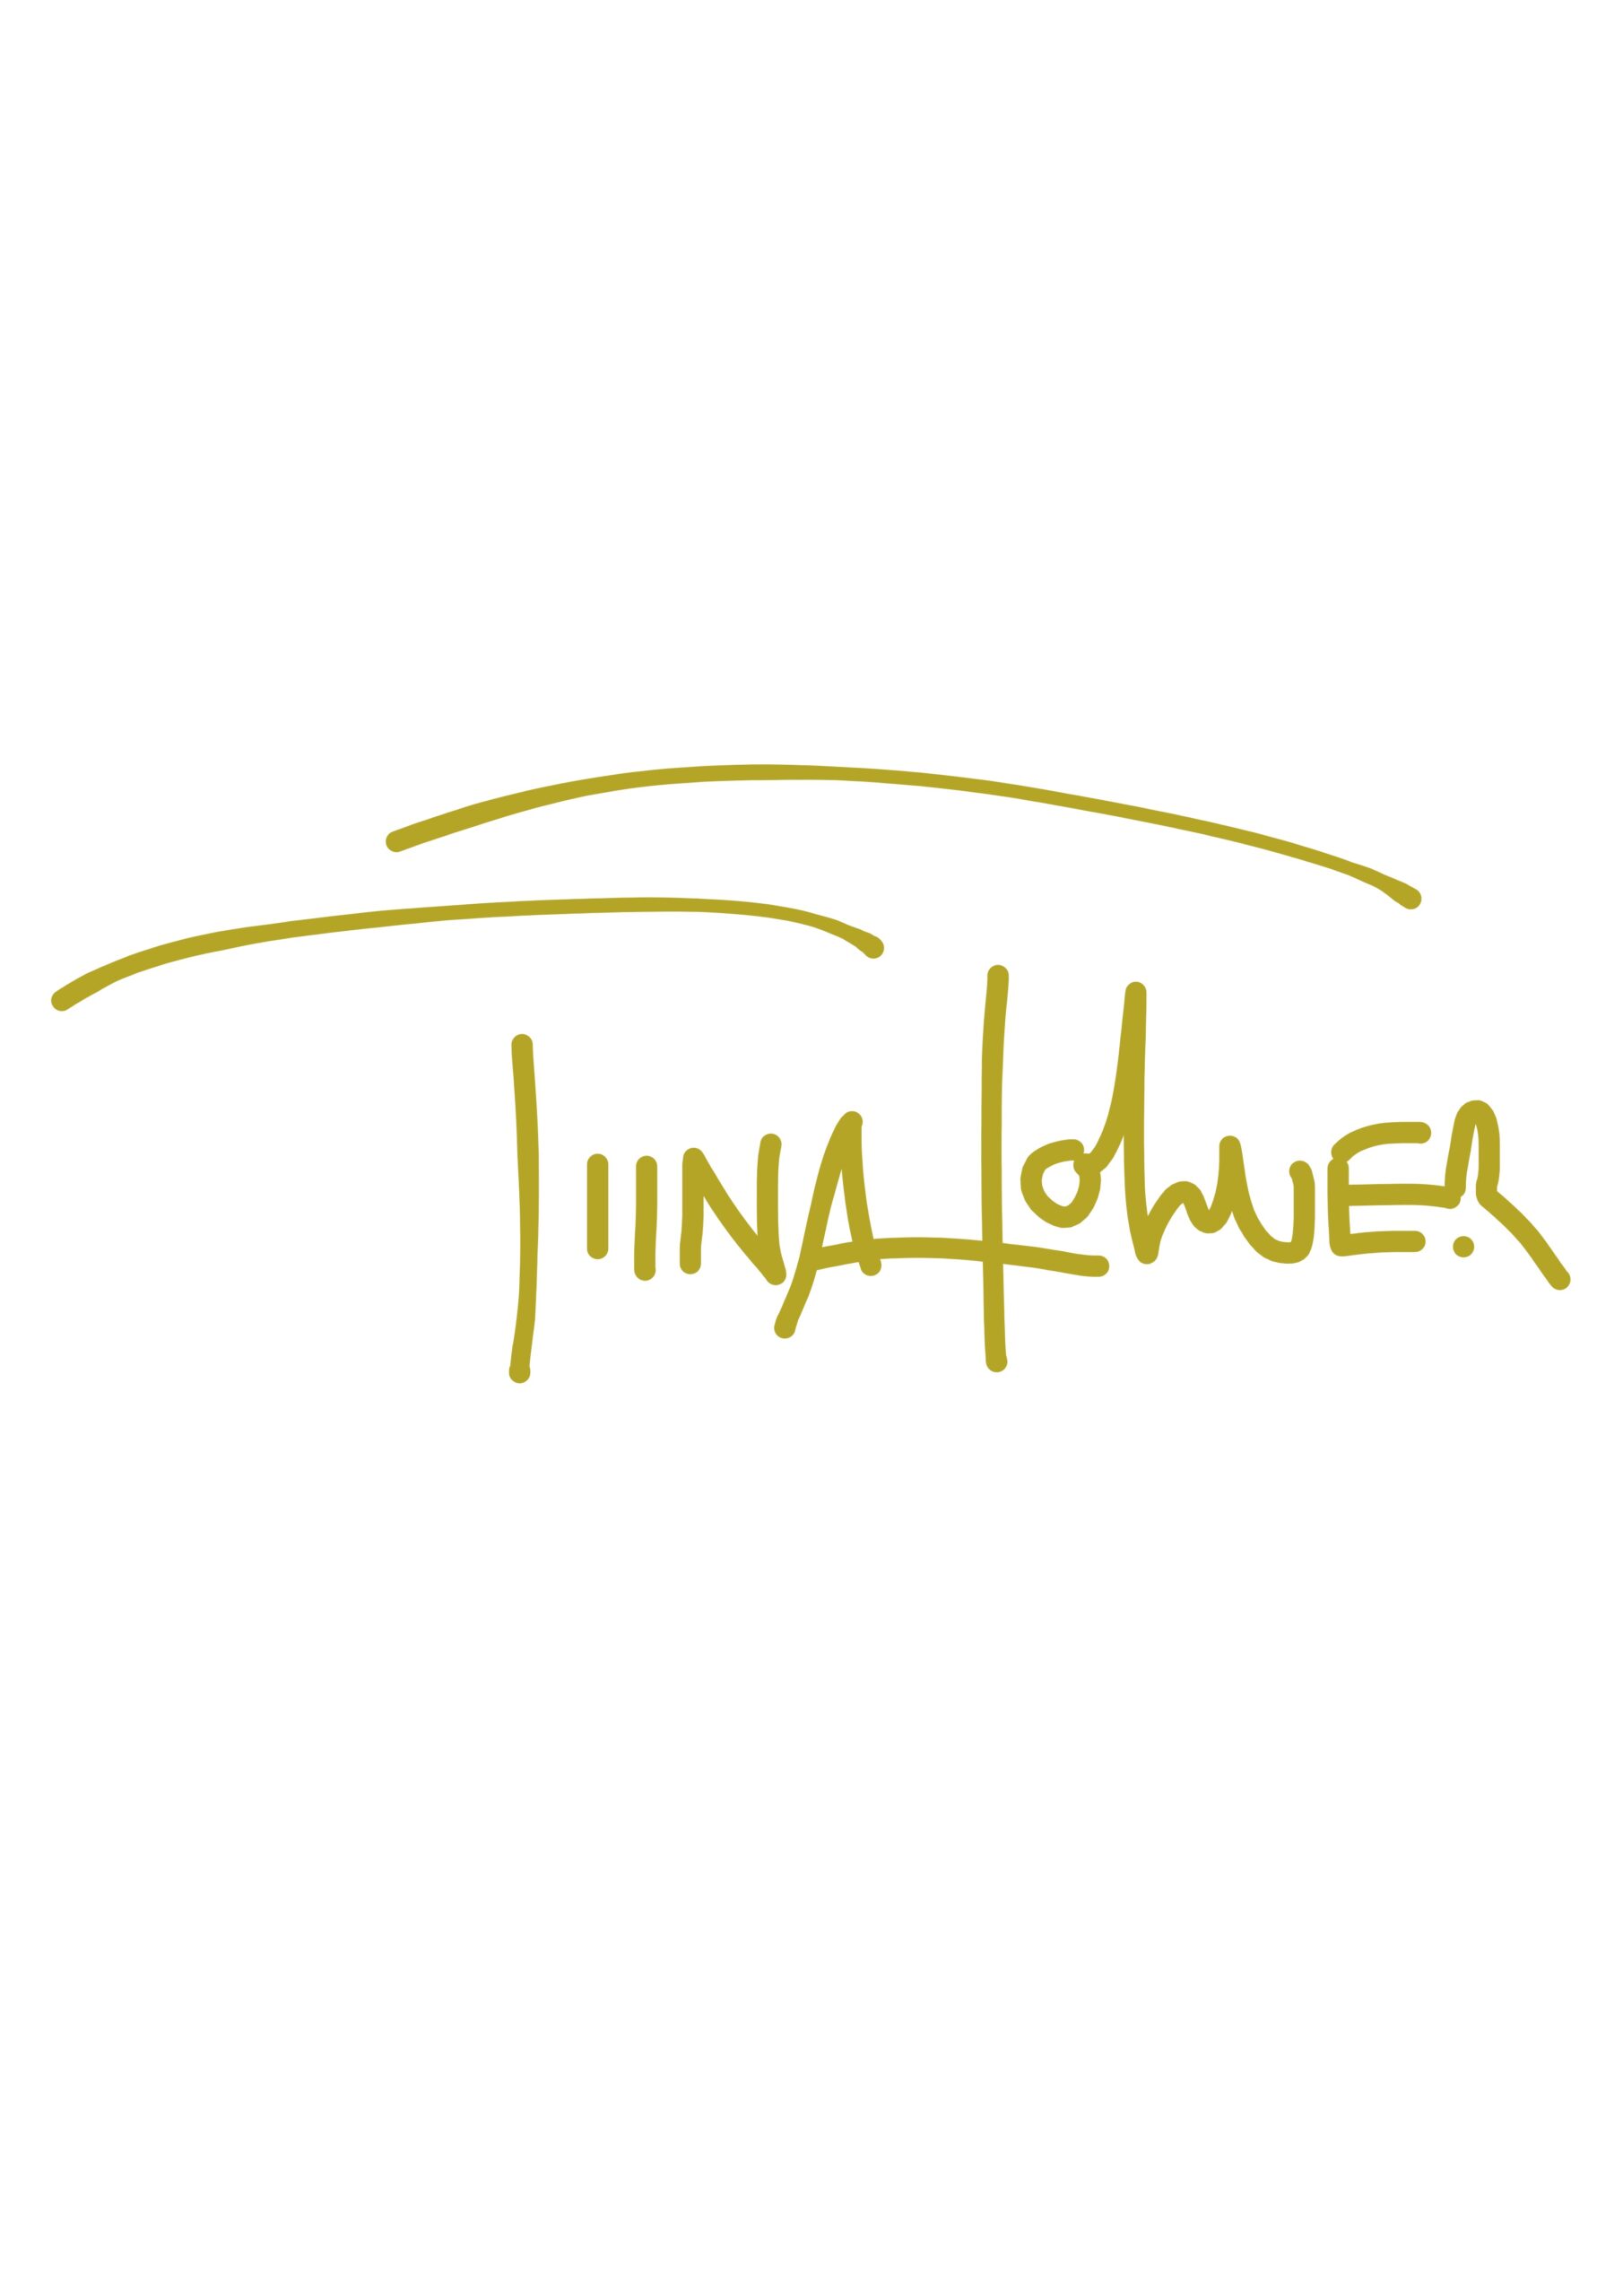 Tiina Tohver Signature Coaching